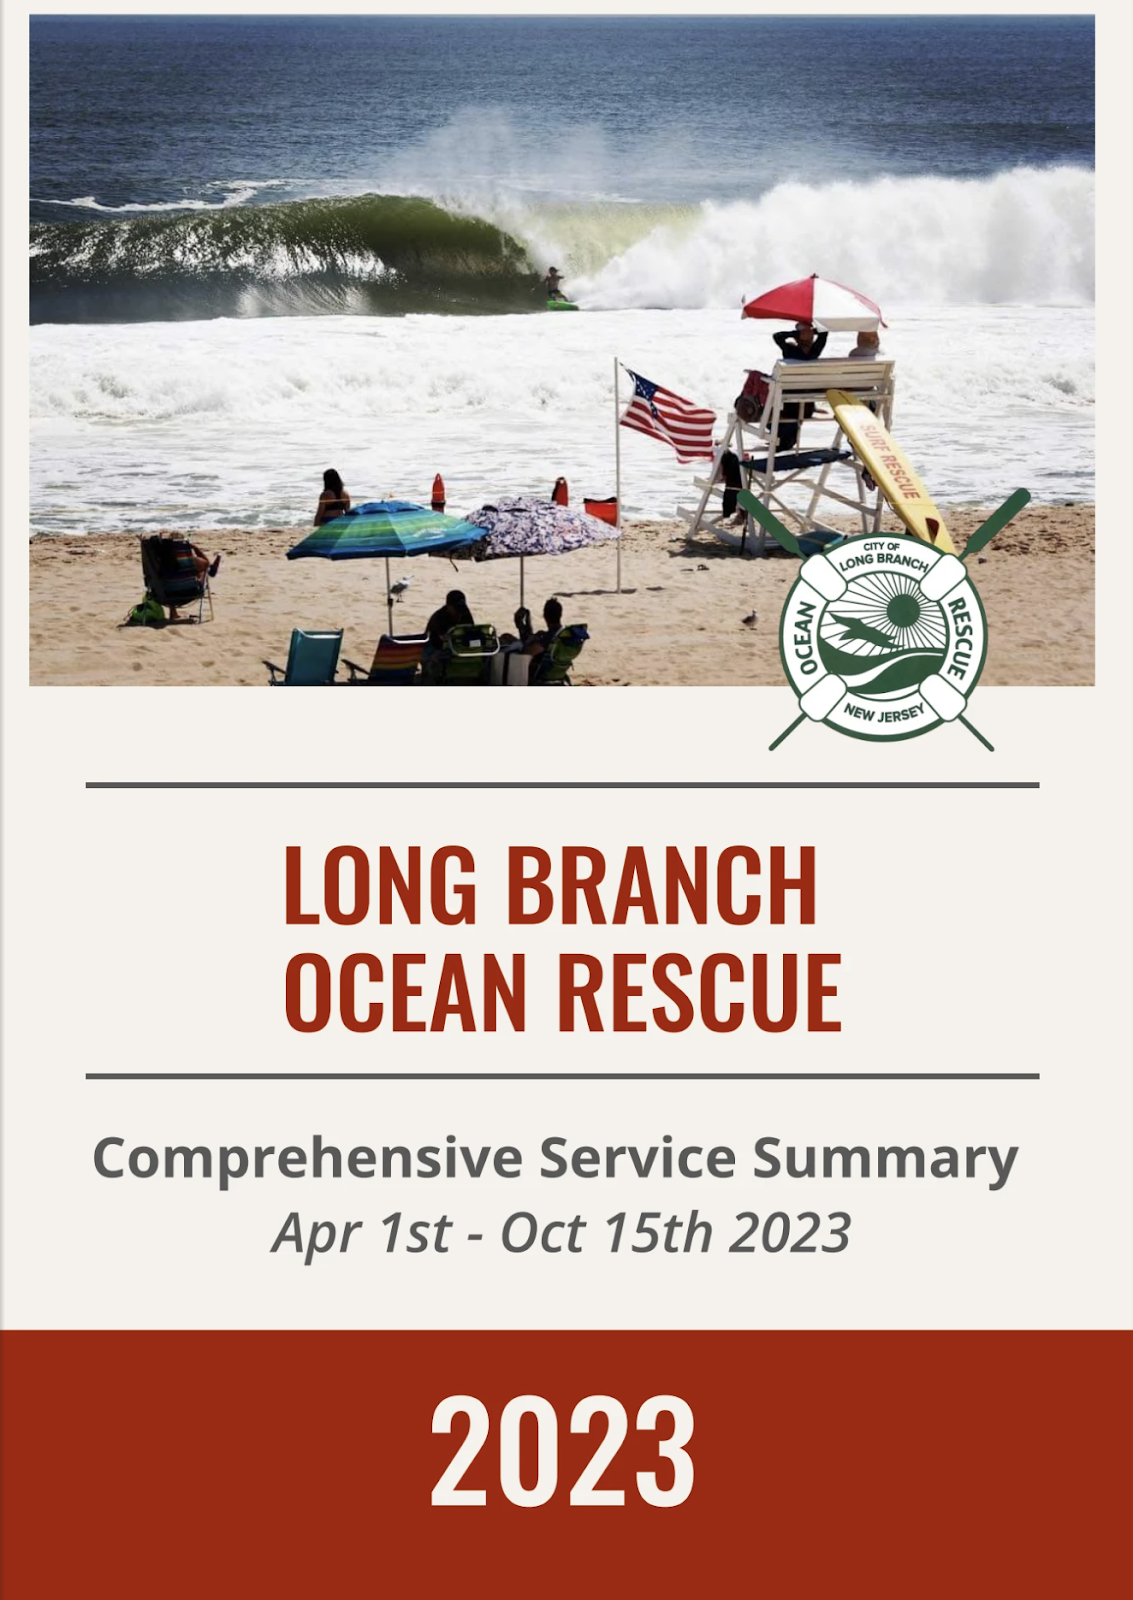 Long Branch, Seaside Resort, Beach Town, Monmouth County